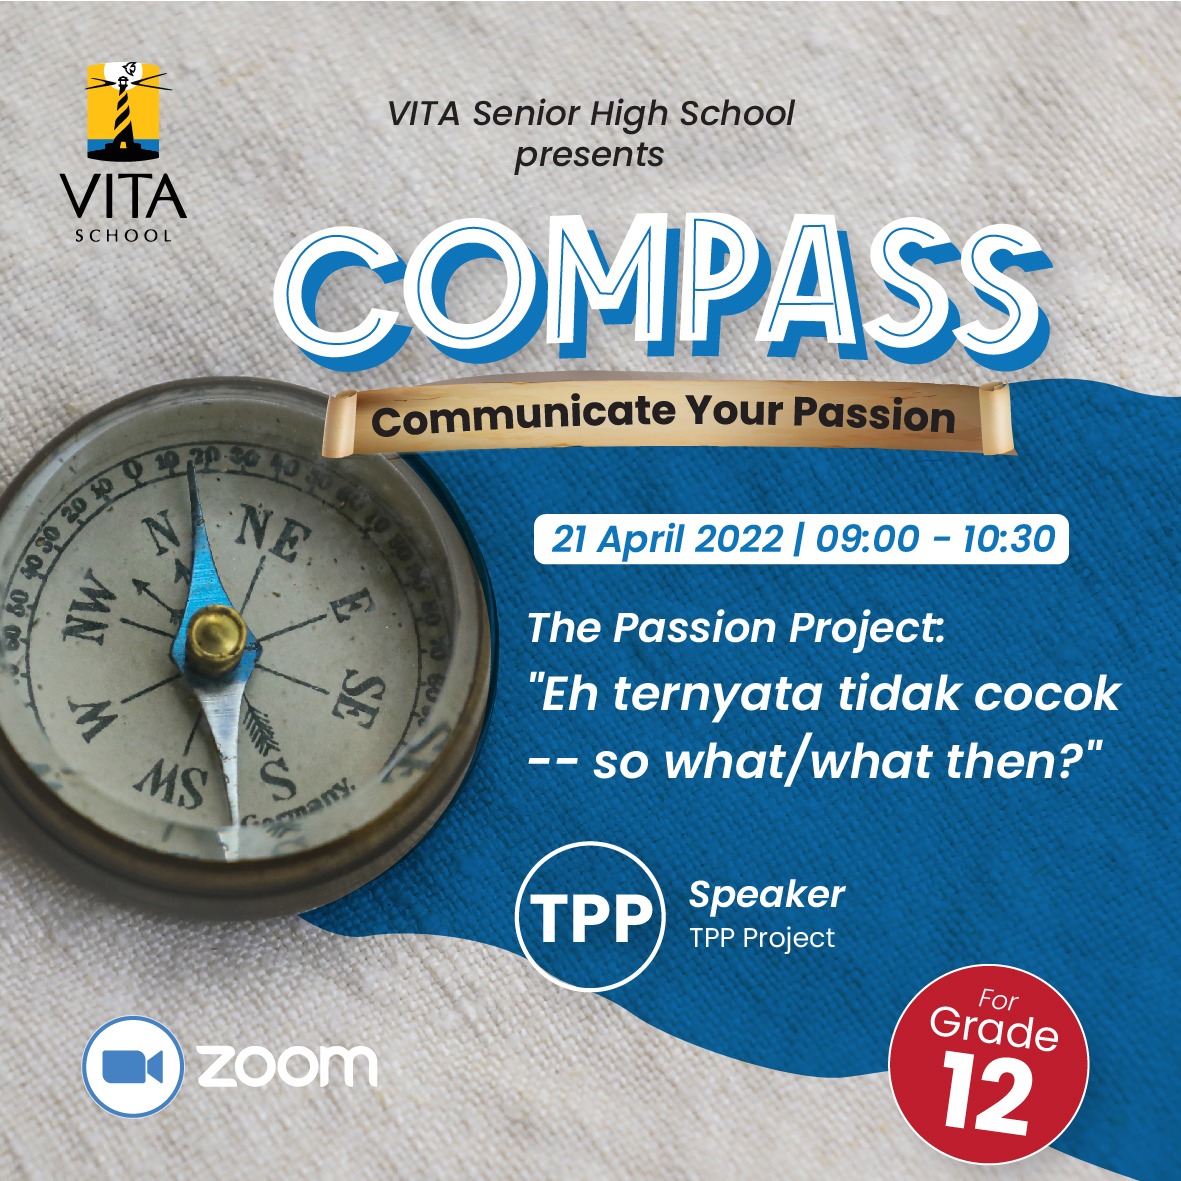 VITA Senior High COMPASS 2022 - The Passion Project: 